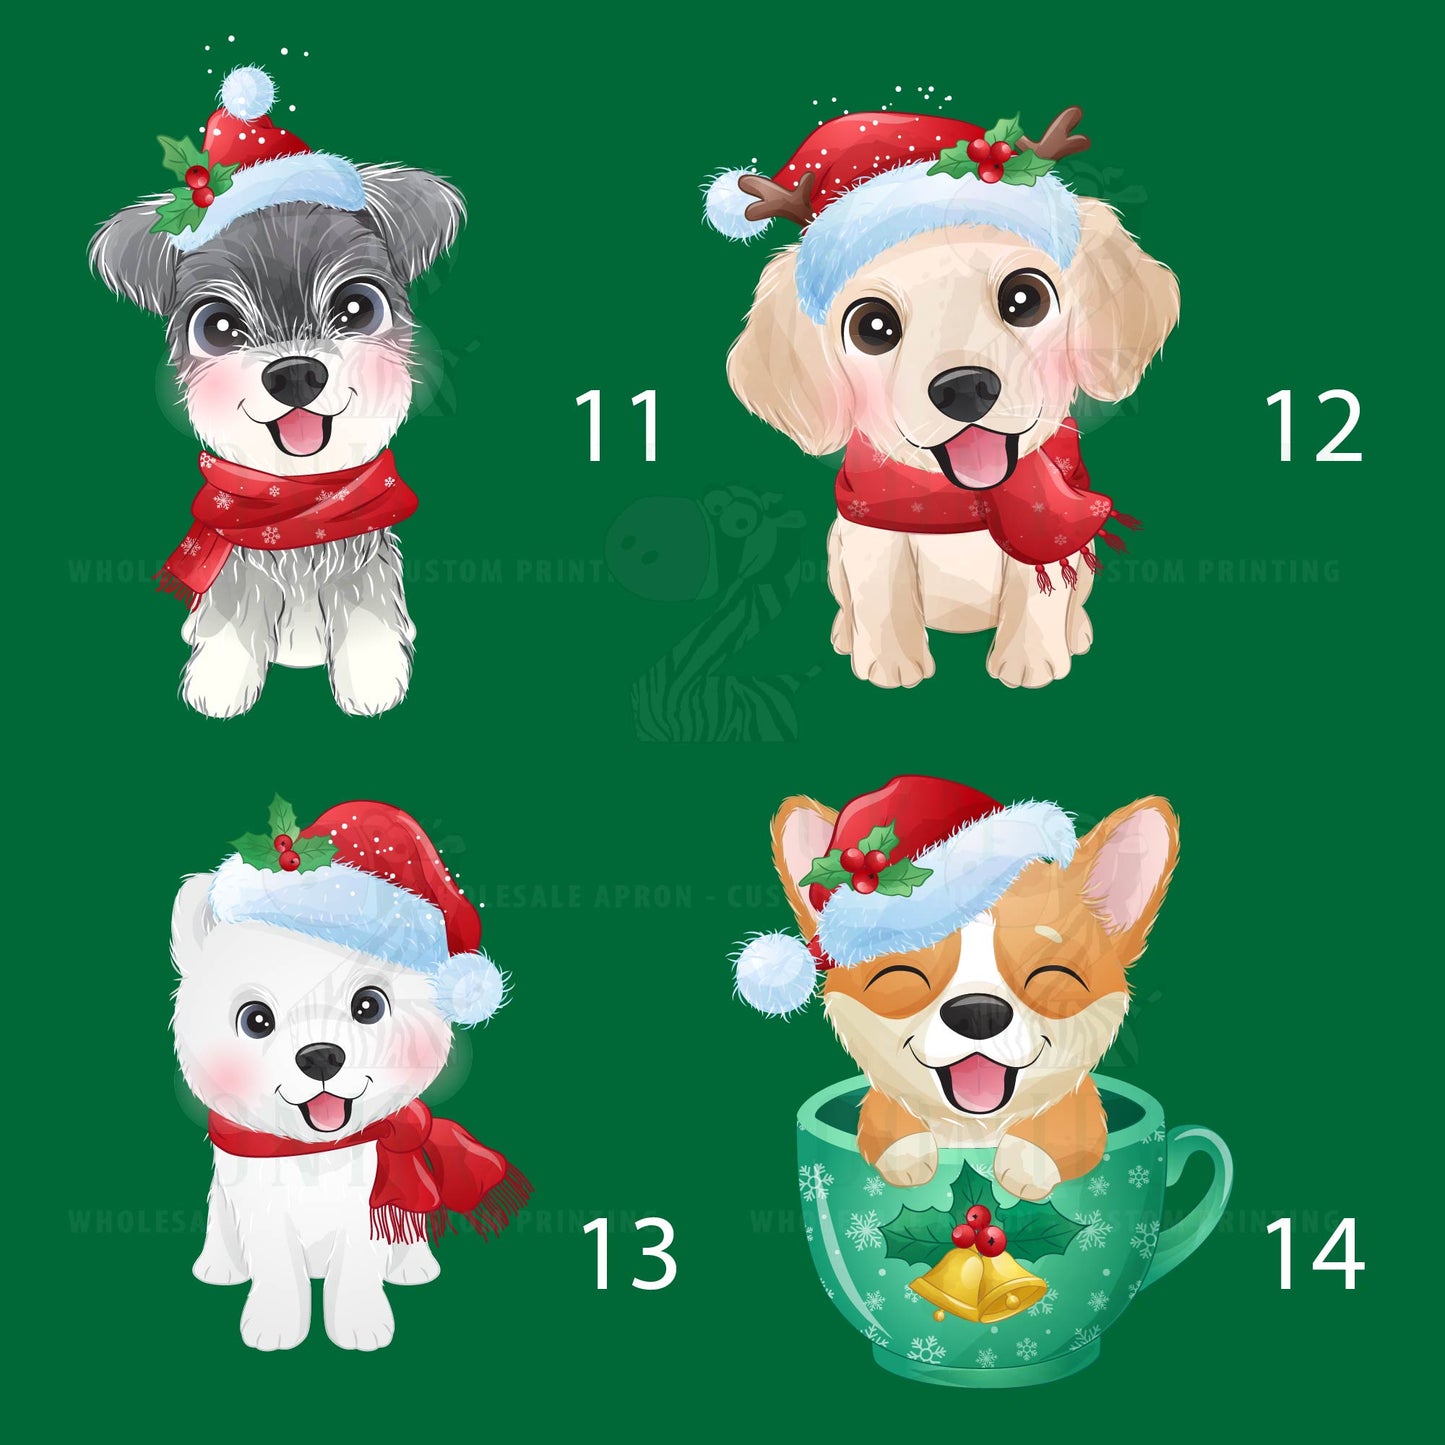 Christmas Apron - Customize your doggie name on apron